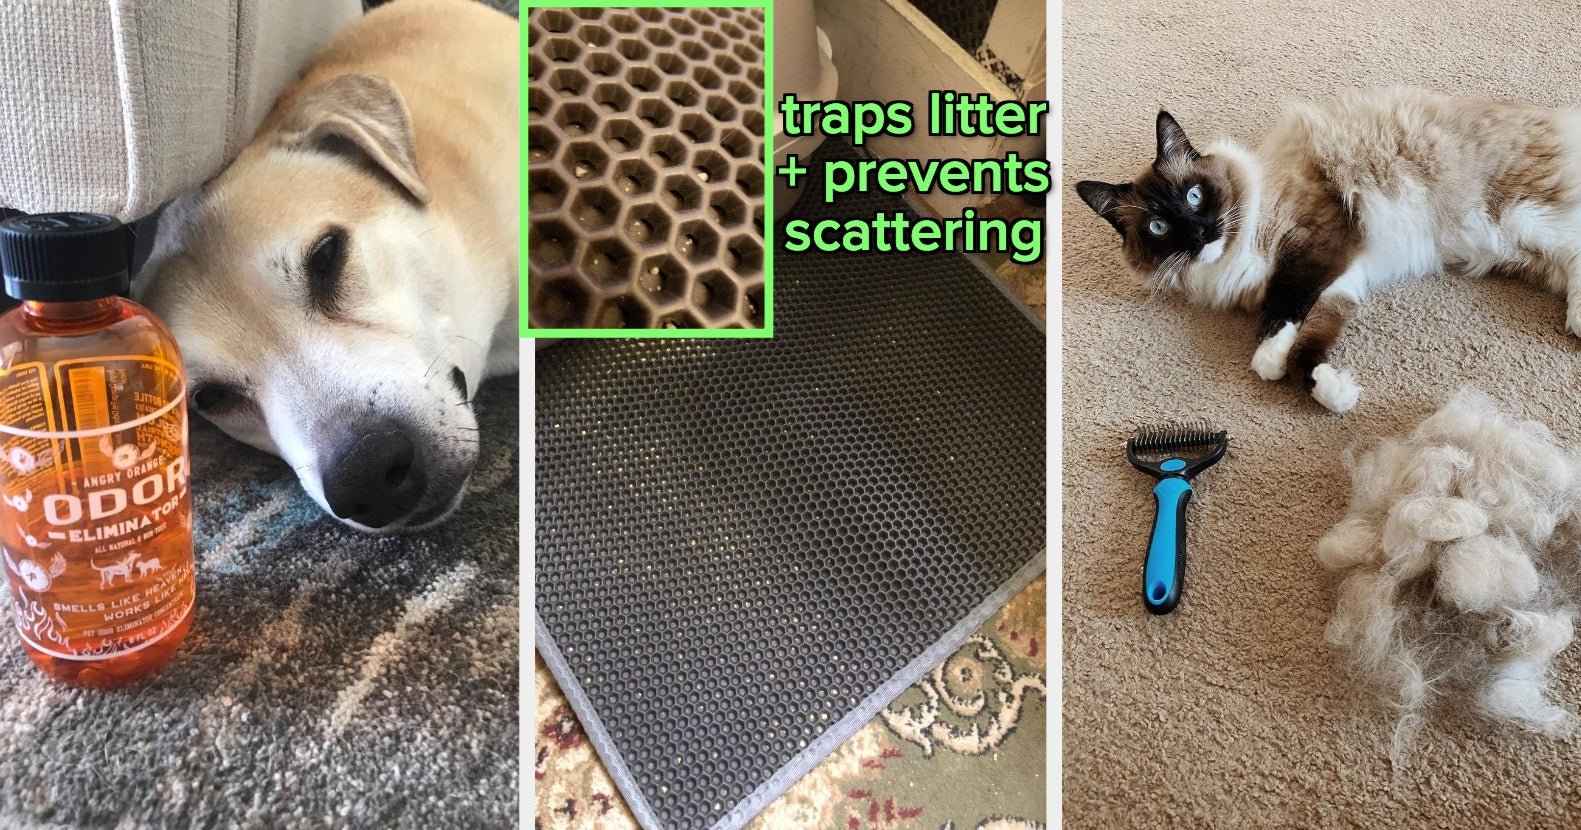 Premium Grade Pet Food Mat, Silicone Cat Litter Mat, Floor Protective Mat, Waterproof, Urine Proof Silicone Pet Mat with Silicone Bristles to Help